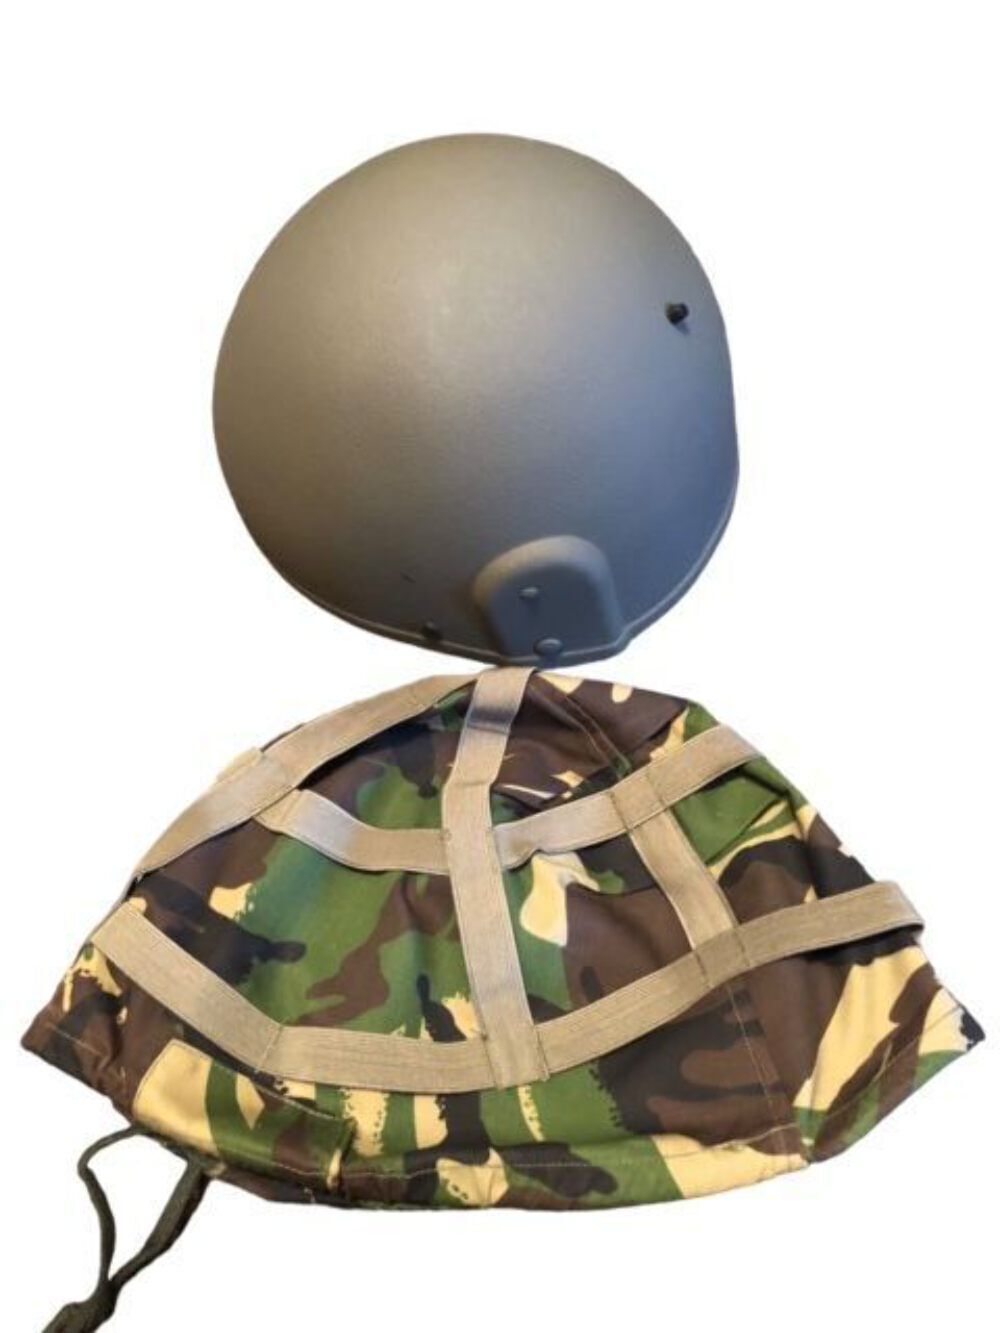 British Army MK 6 combat helmet 2006 with DPM helmet cover